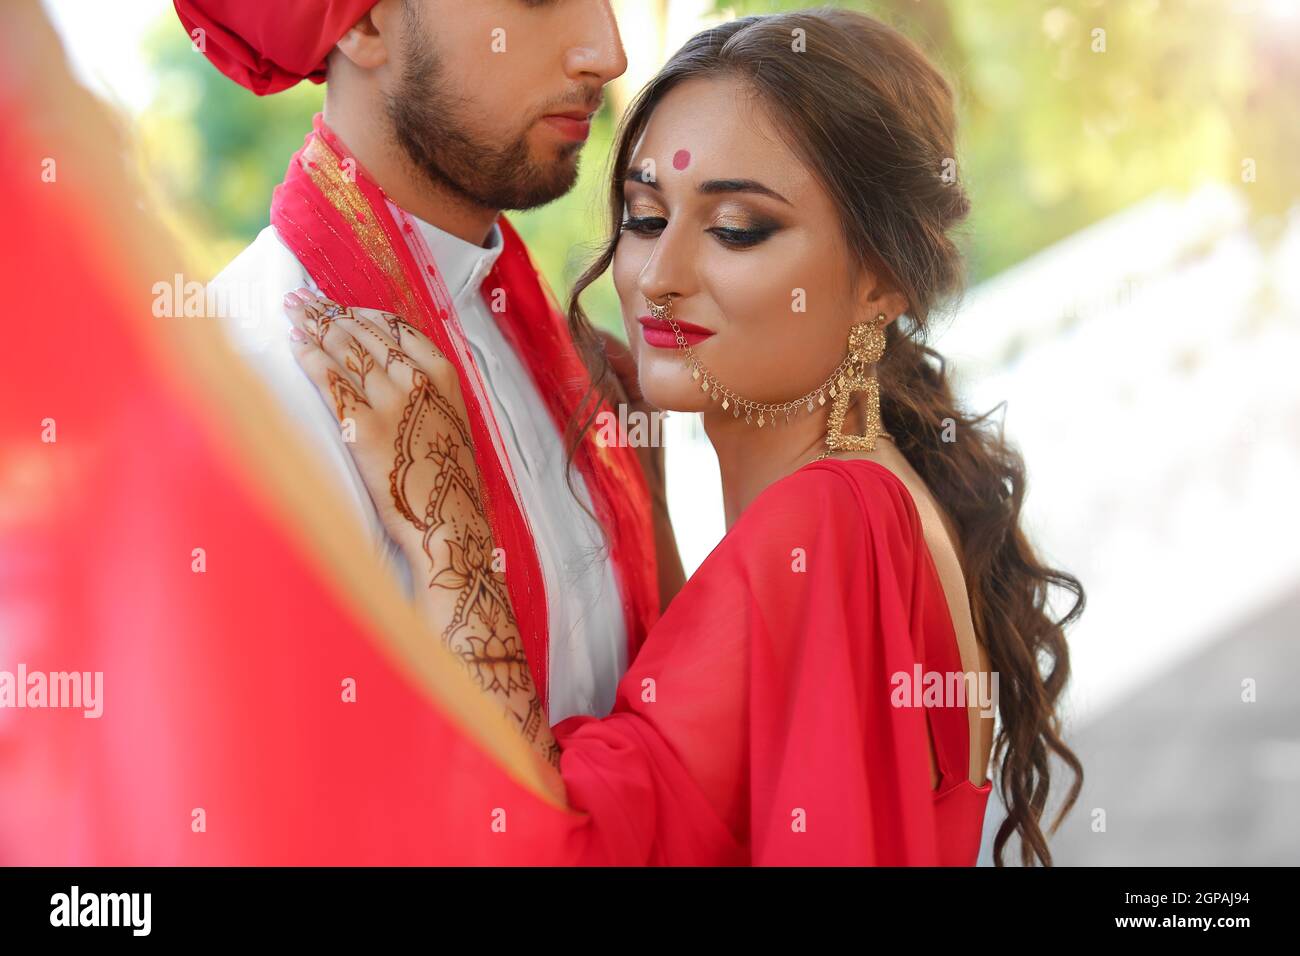 Beautiful Indian wedding couple outdoors Stock Photo - Alamy